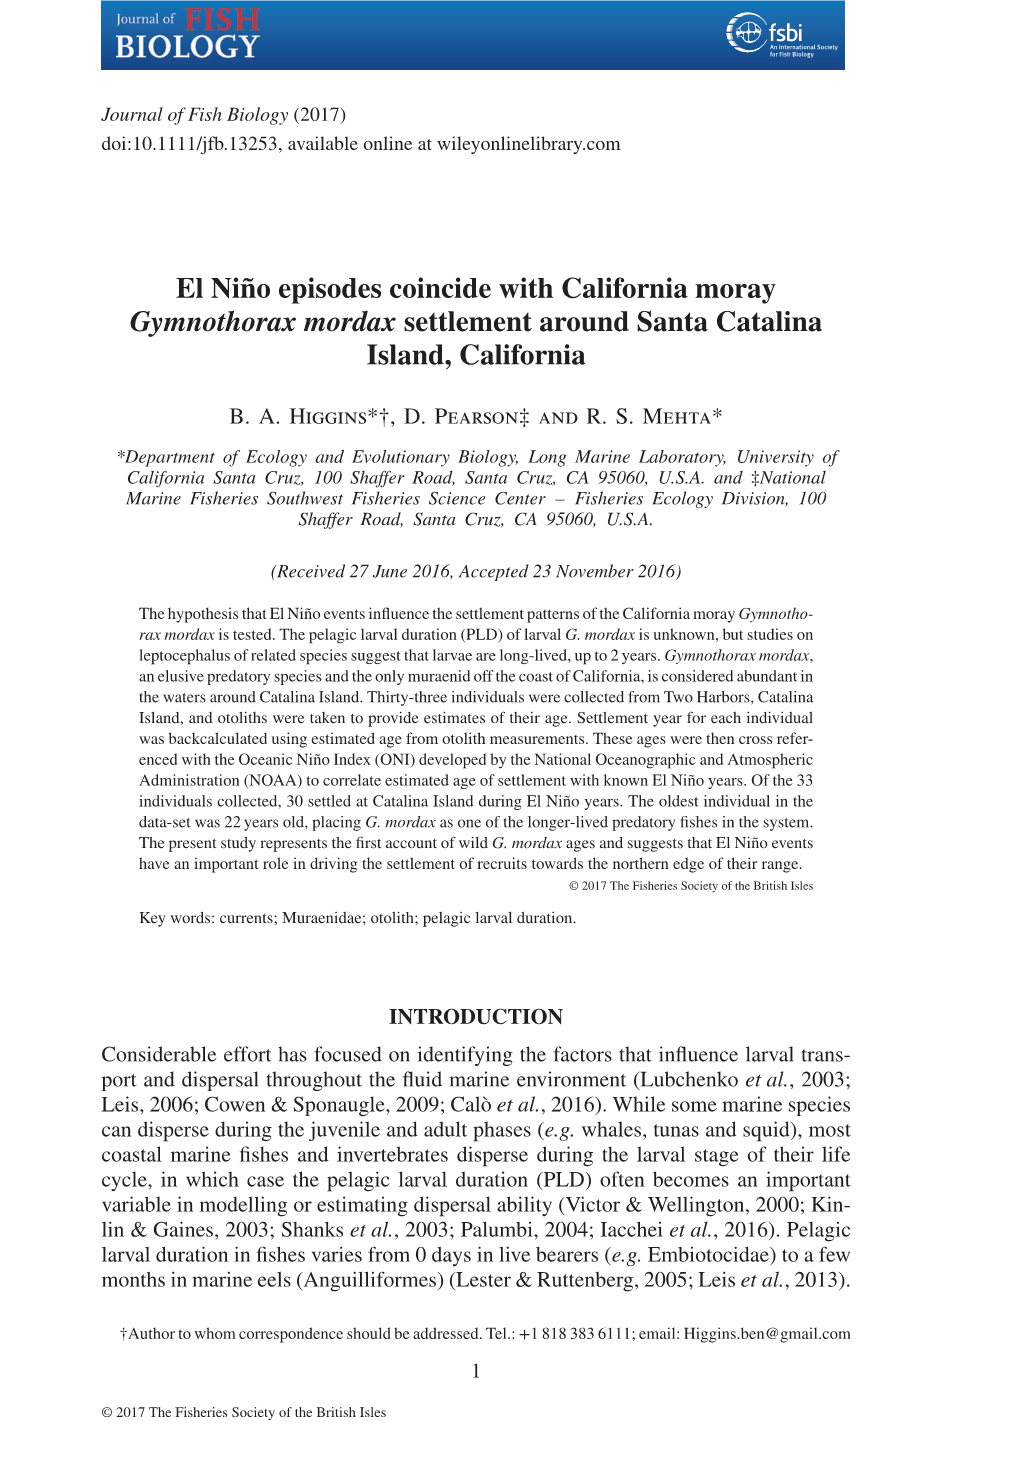 El Niño Episodes Coincide with California Moray Settlement Around